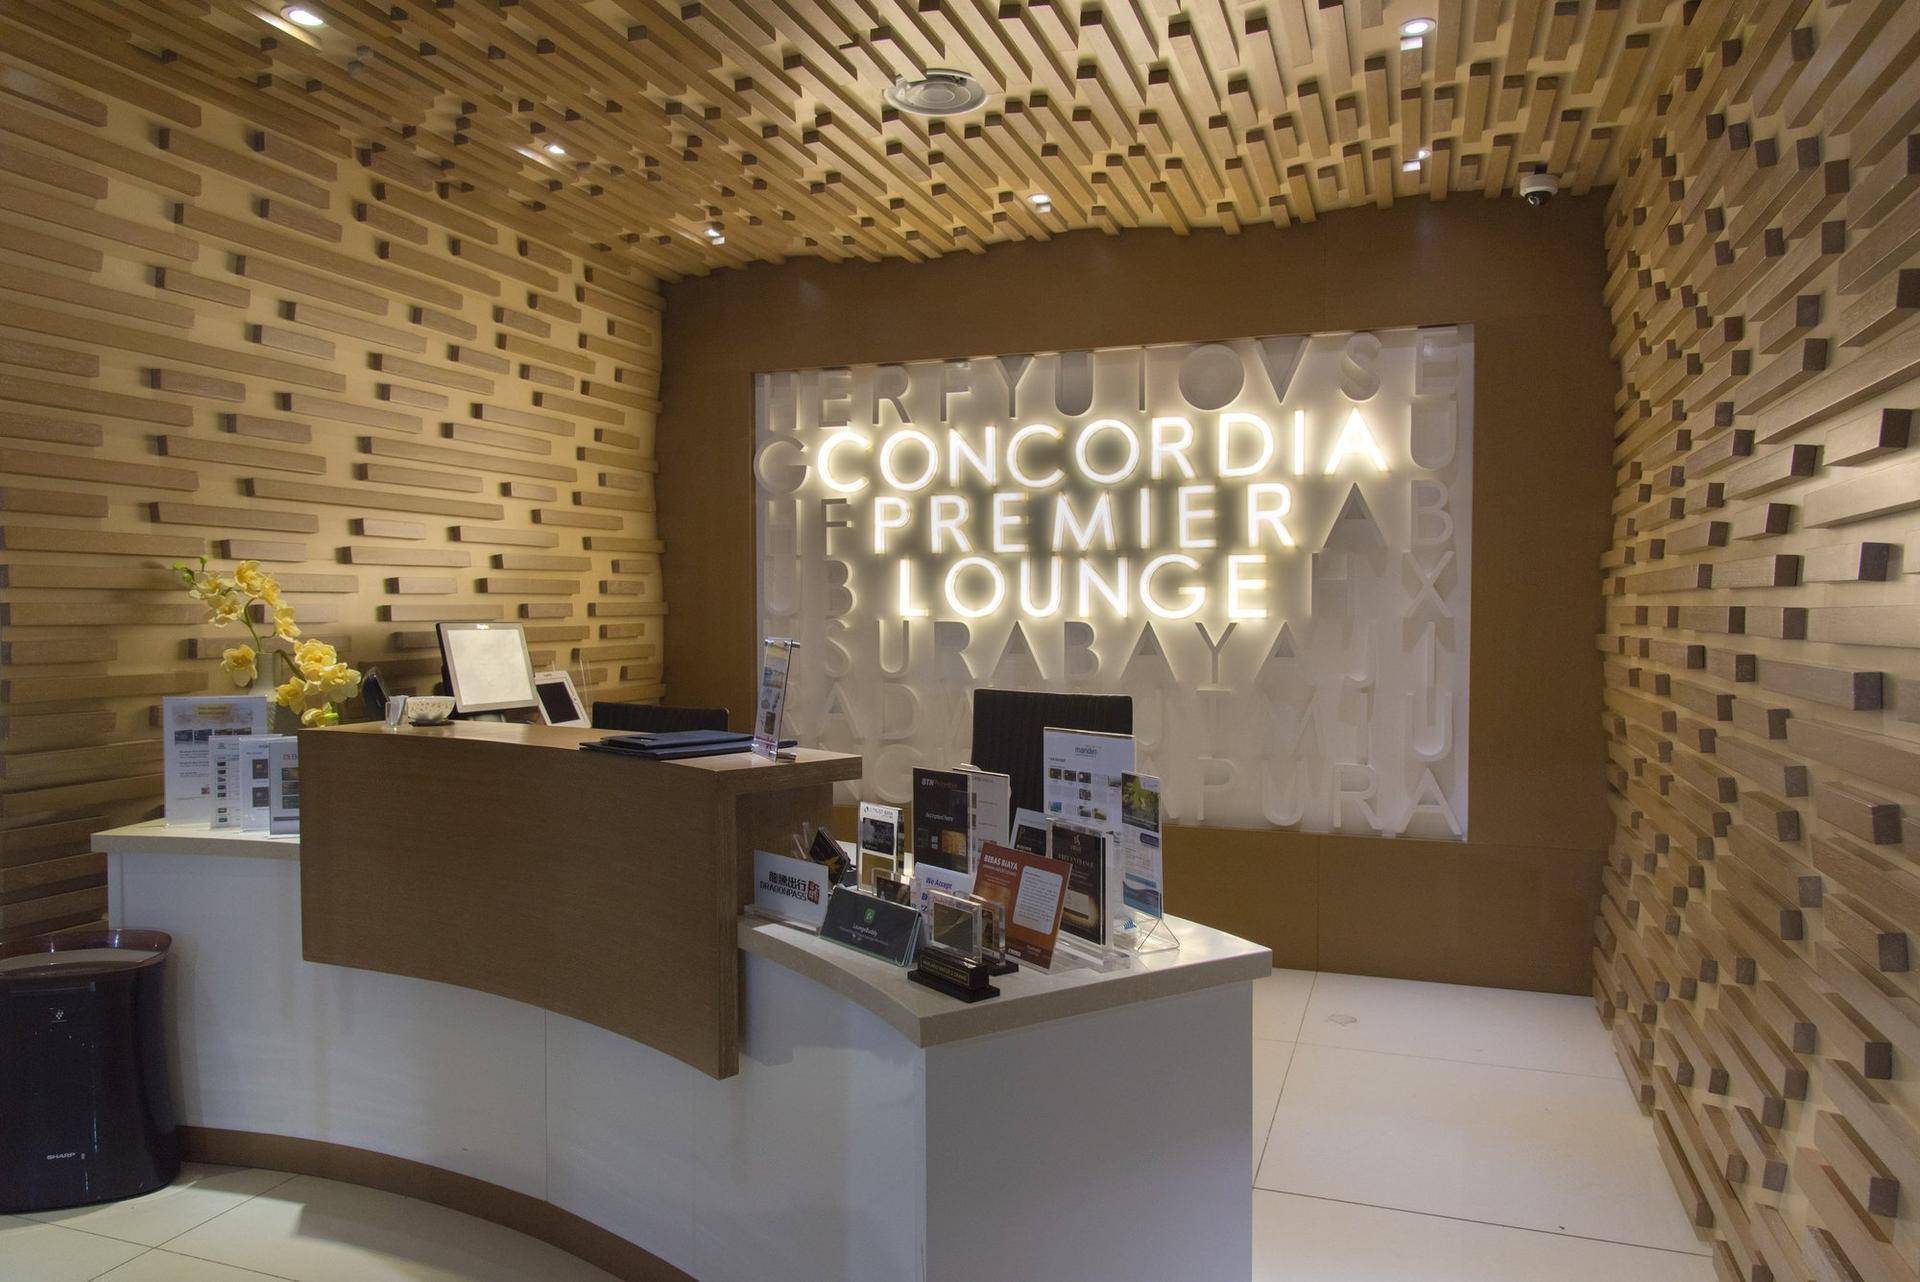 Concordia Premier Lounge image 59 of 81